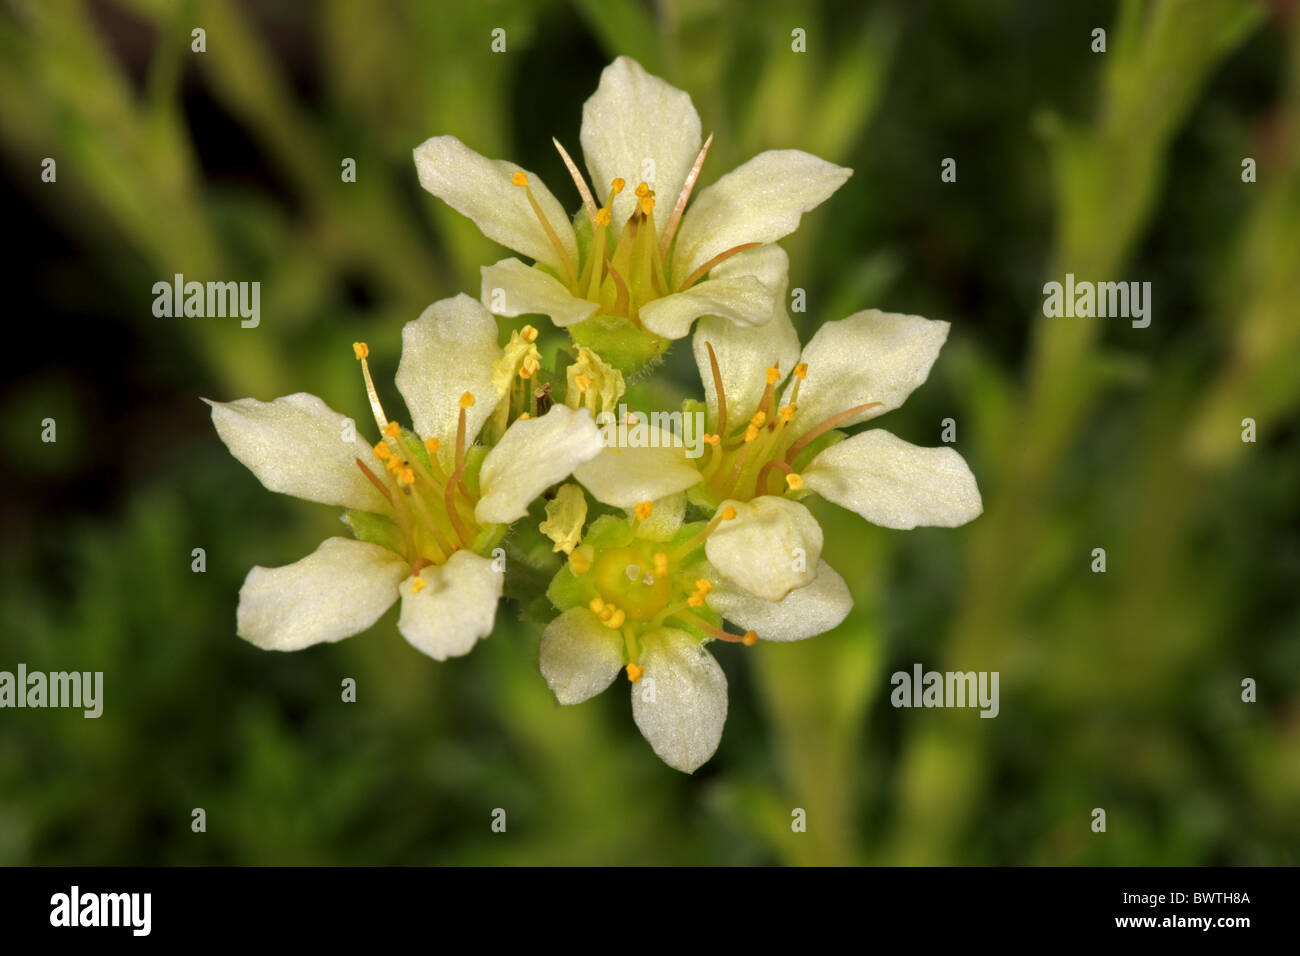 Saxifrage Saxifraga apiculata close-up flowers Stock Photo